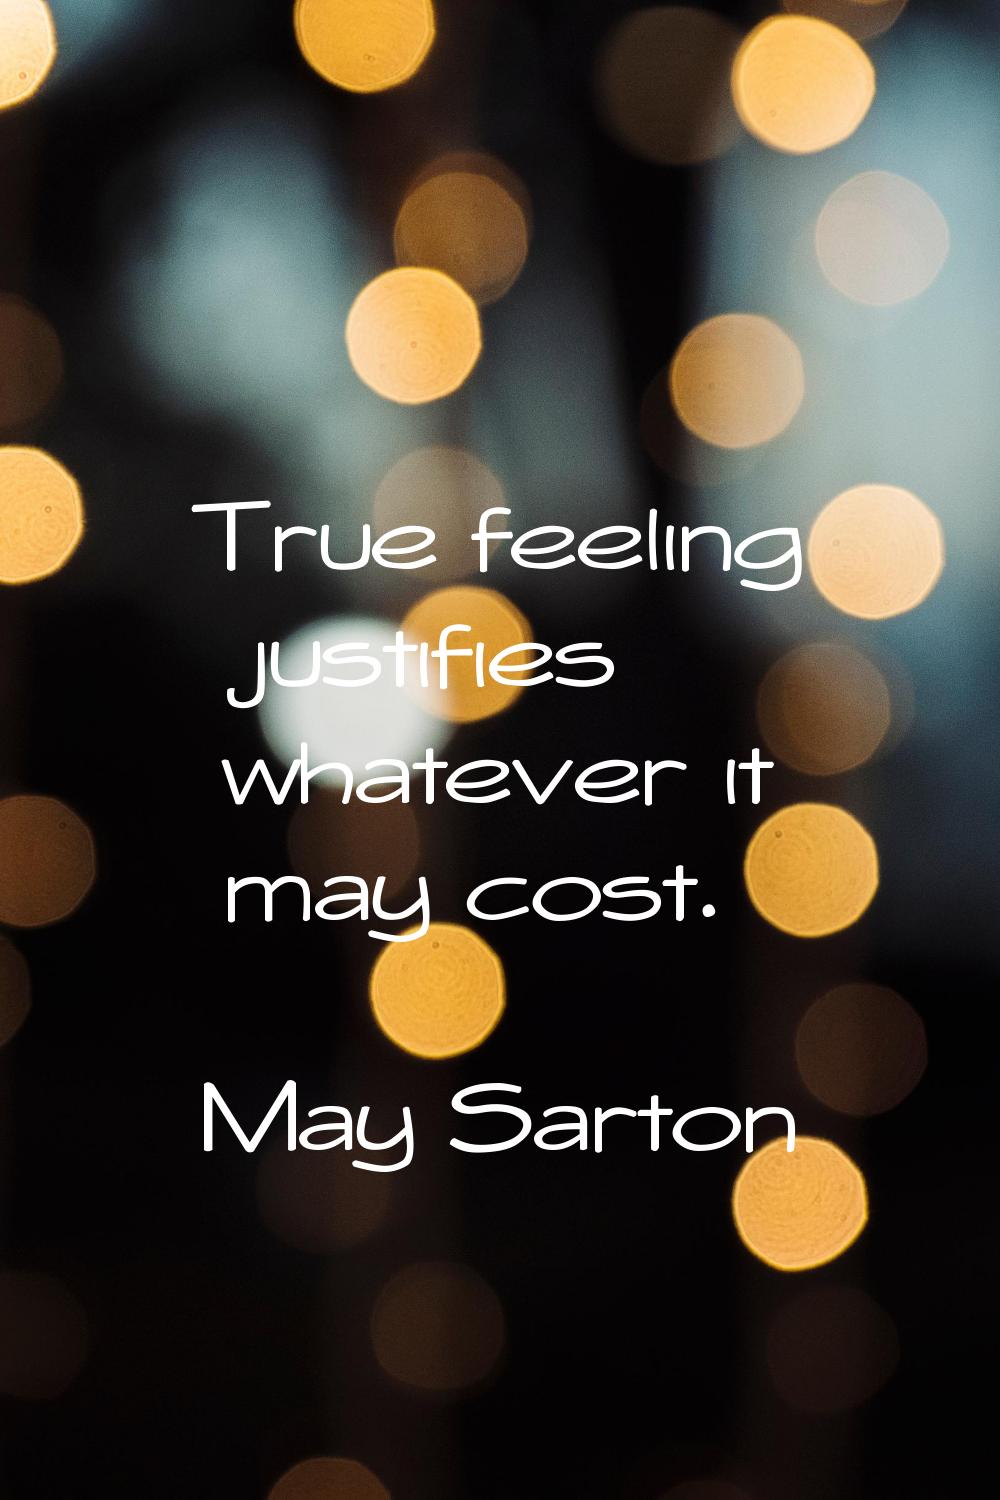 True feeling justifies whatever it may cost.